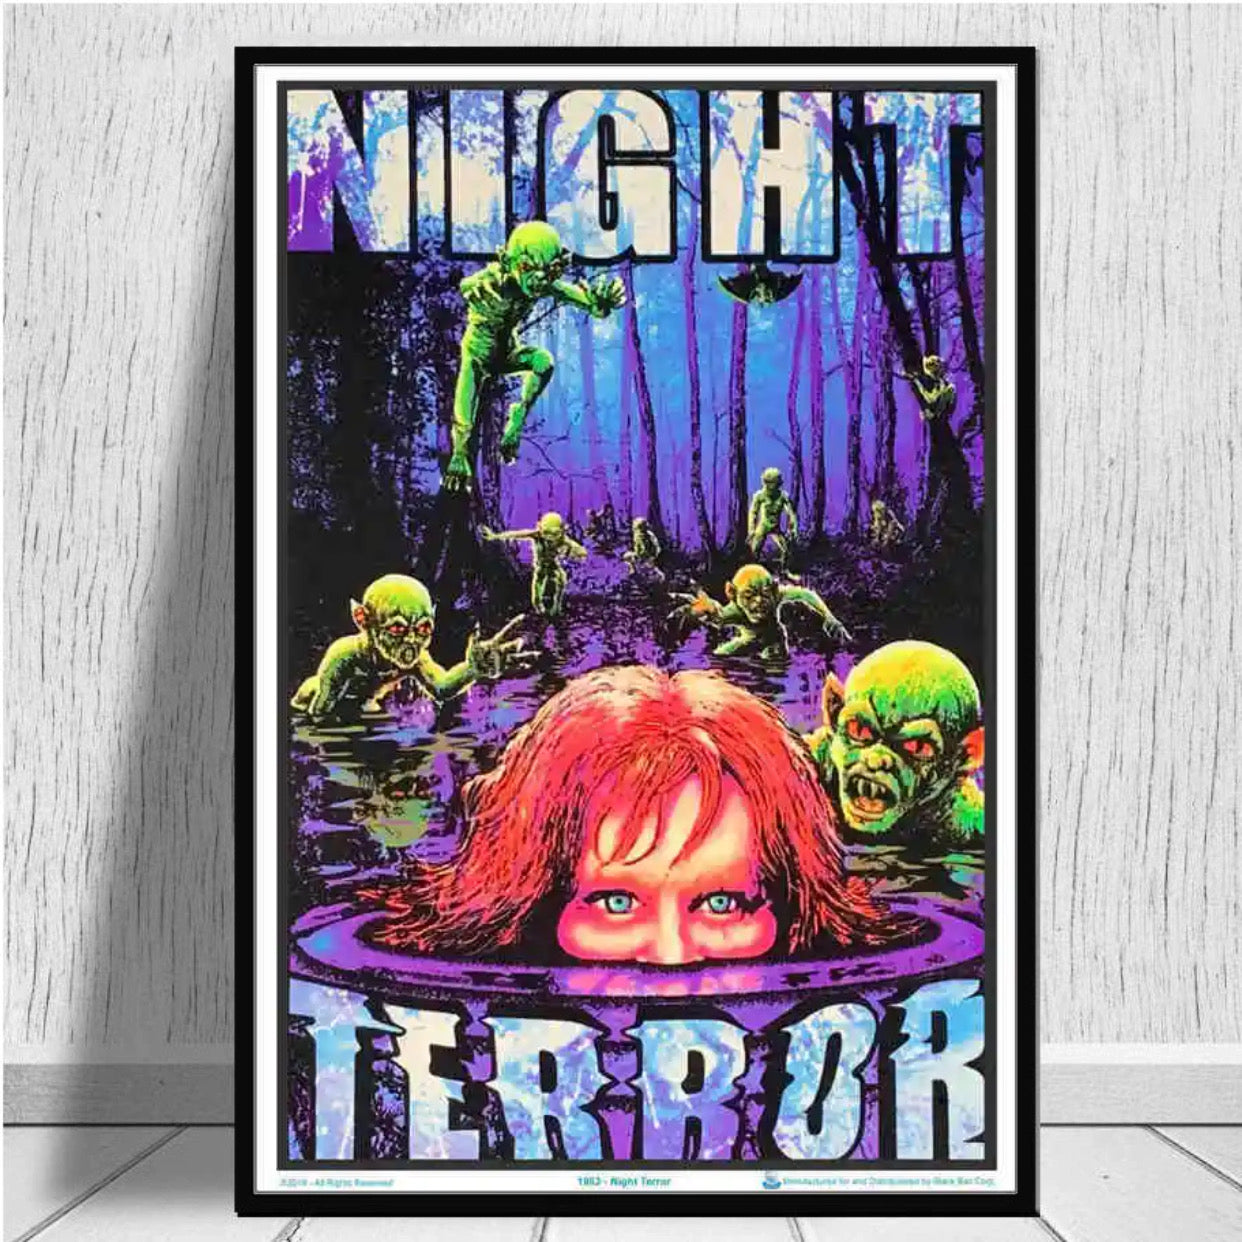 " night terror" poster